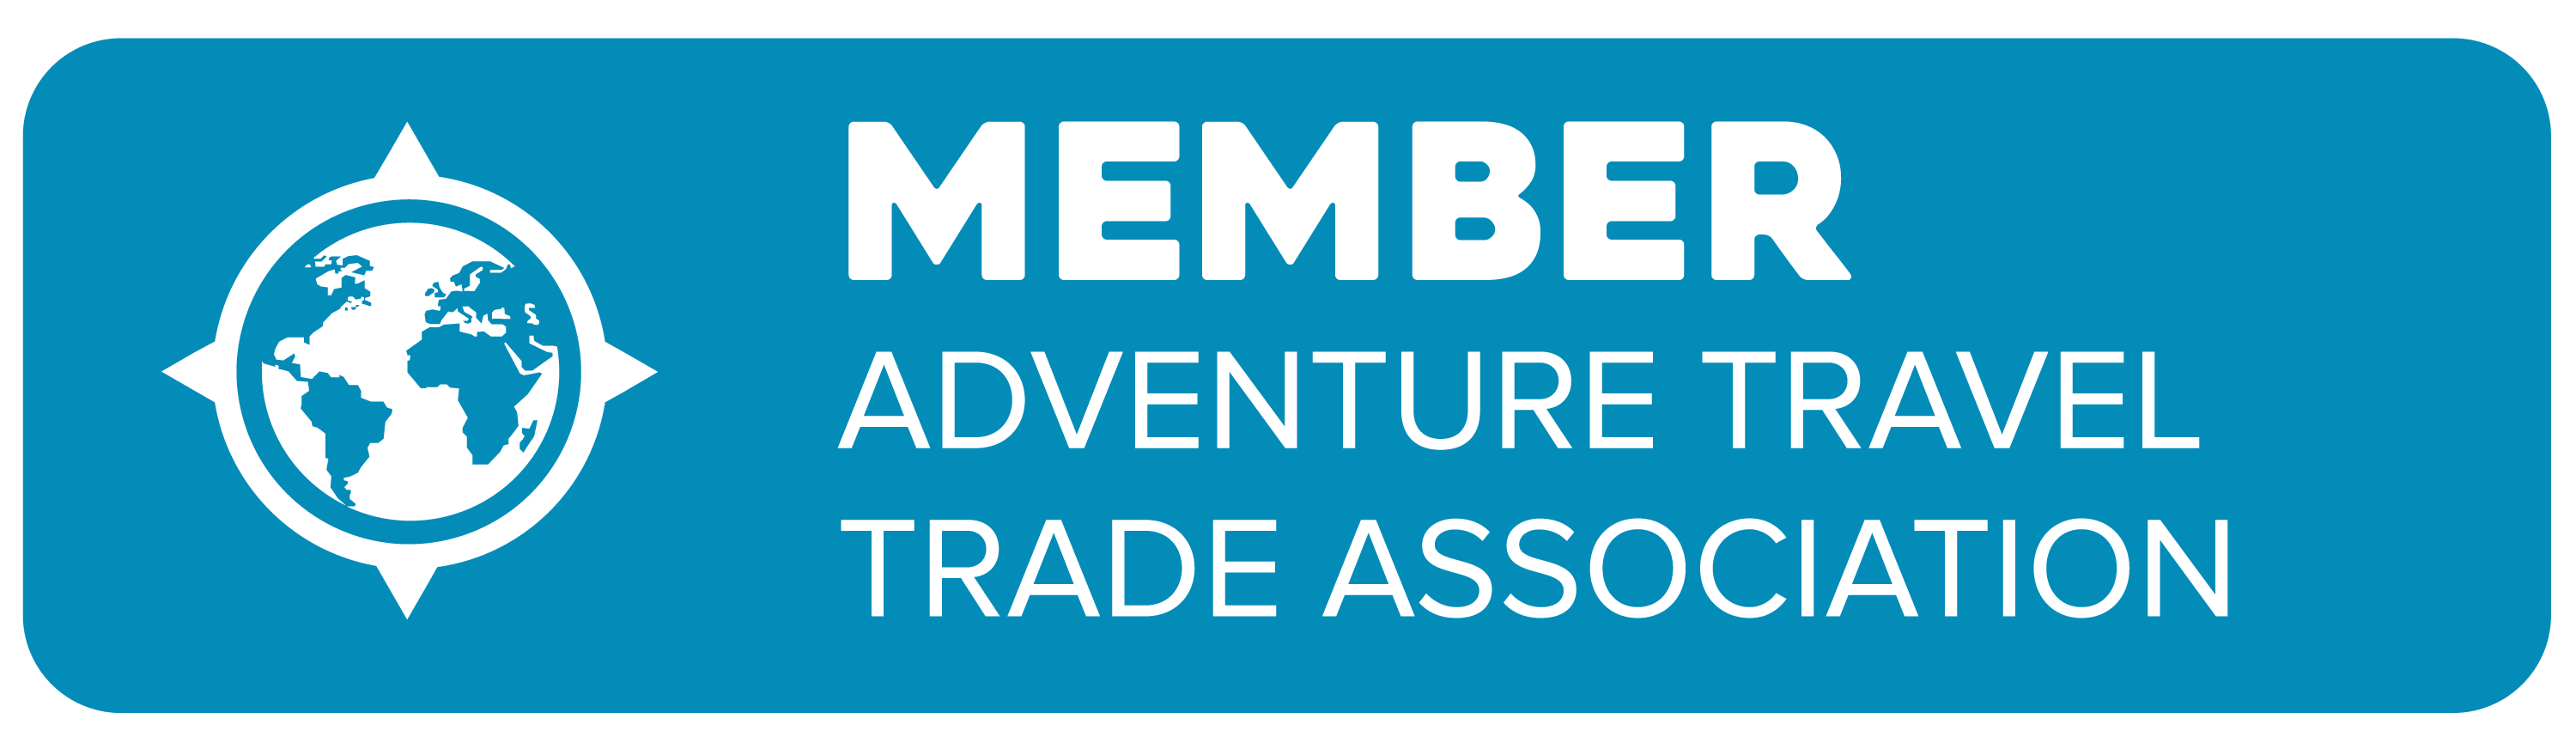 Adventure travel and trade association